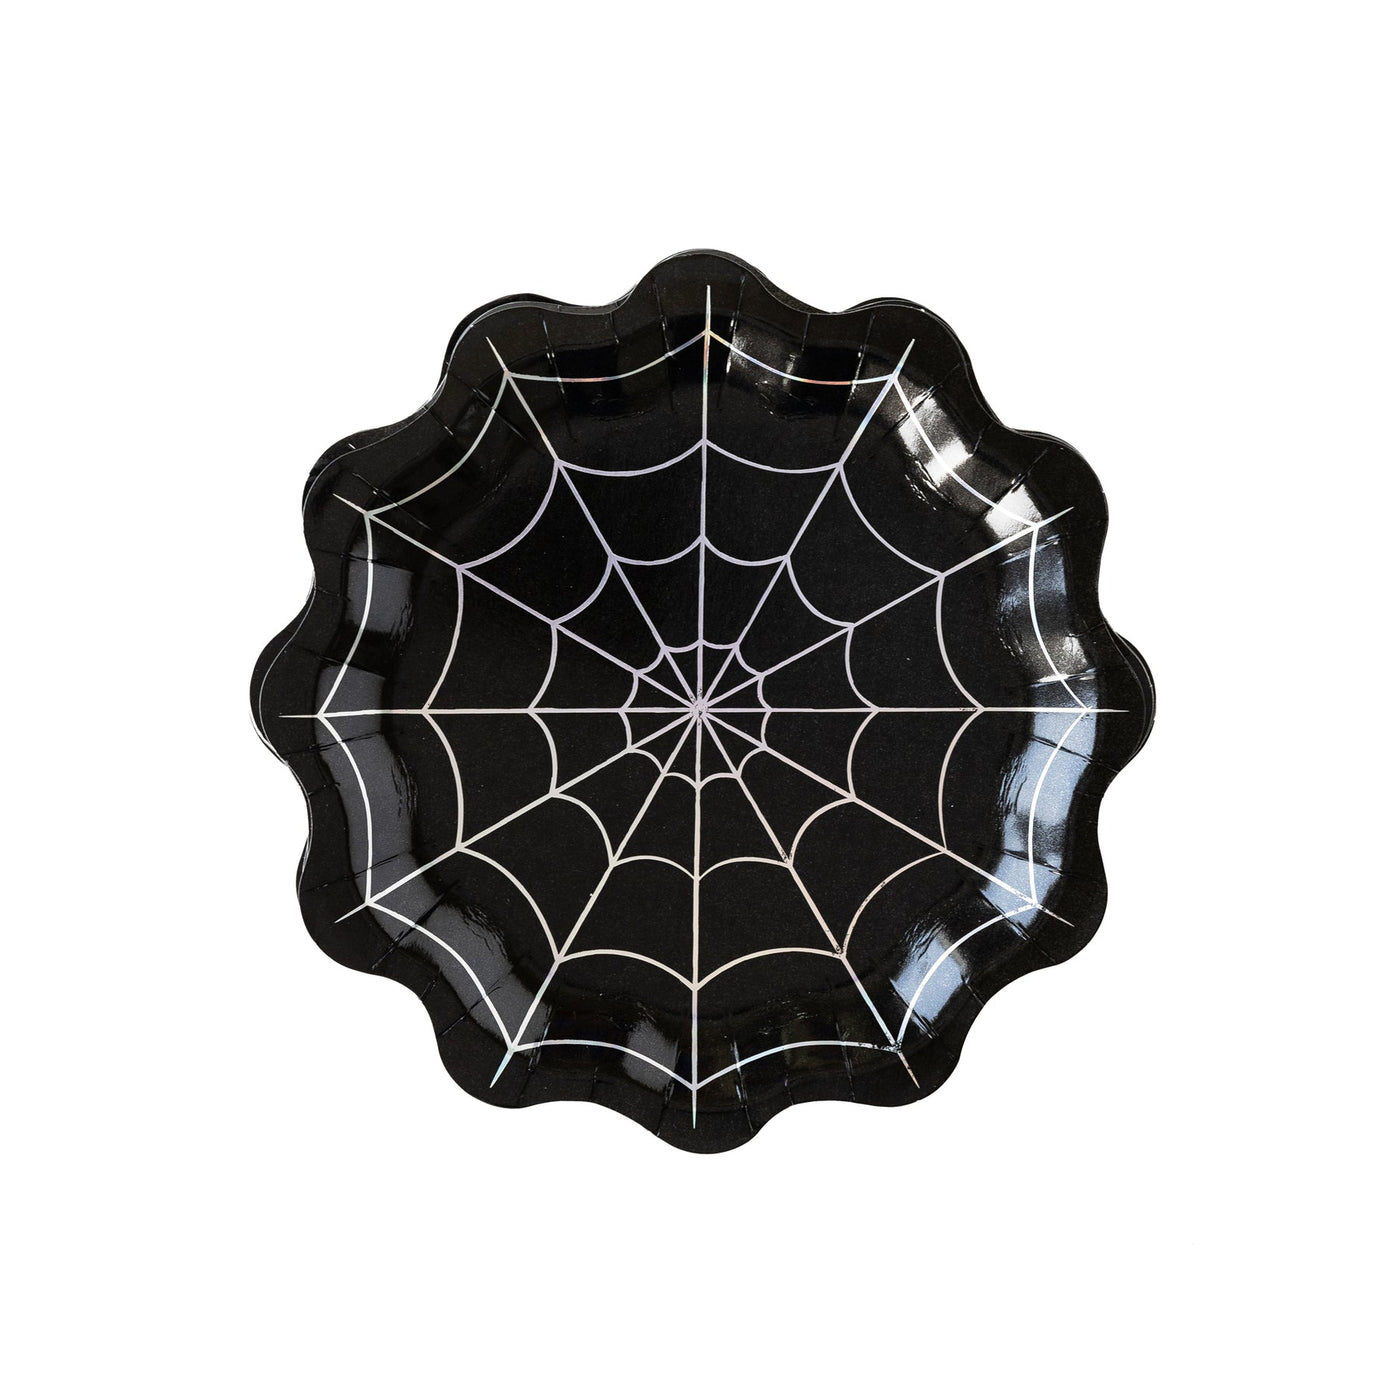 Holographic Spiderweb Plates